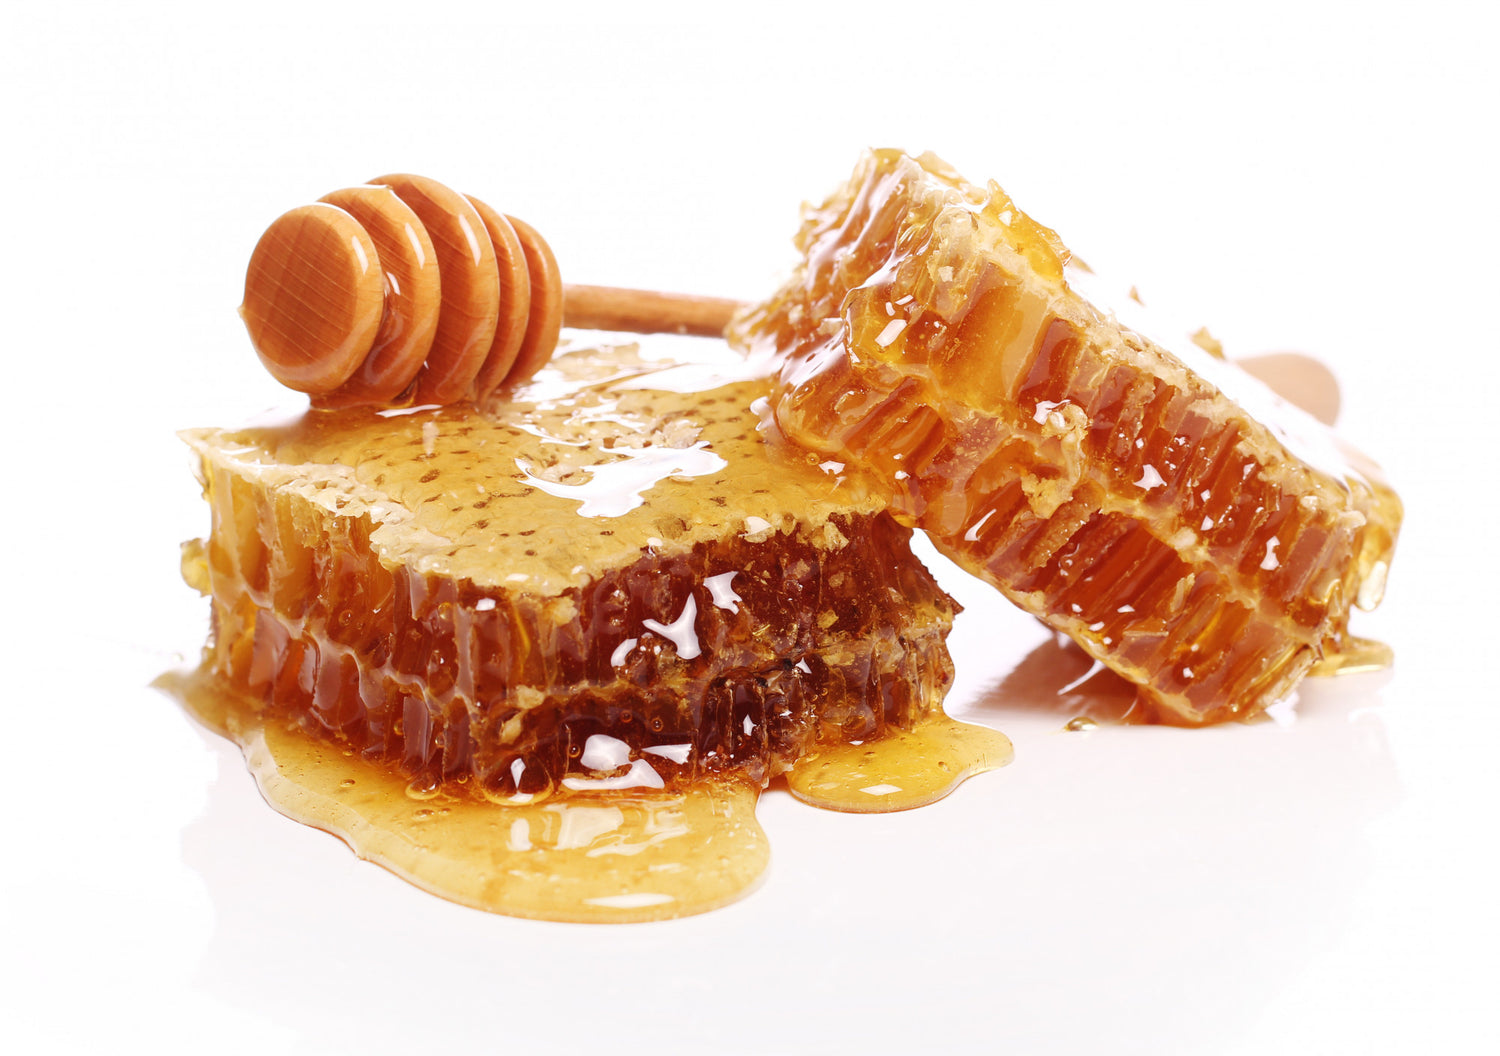 Should I Get pasteurized honey vs unpasteurized?